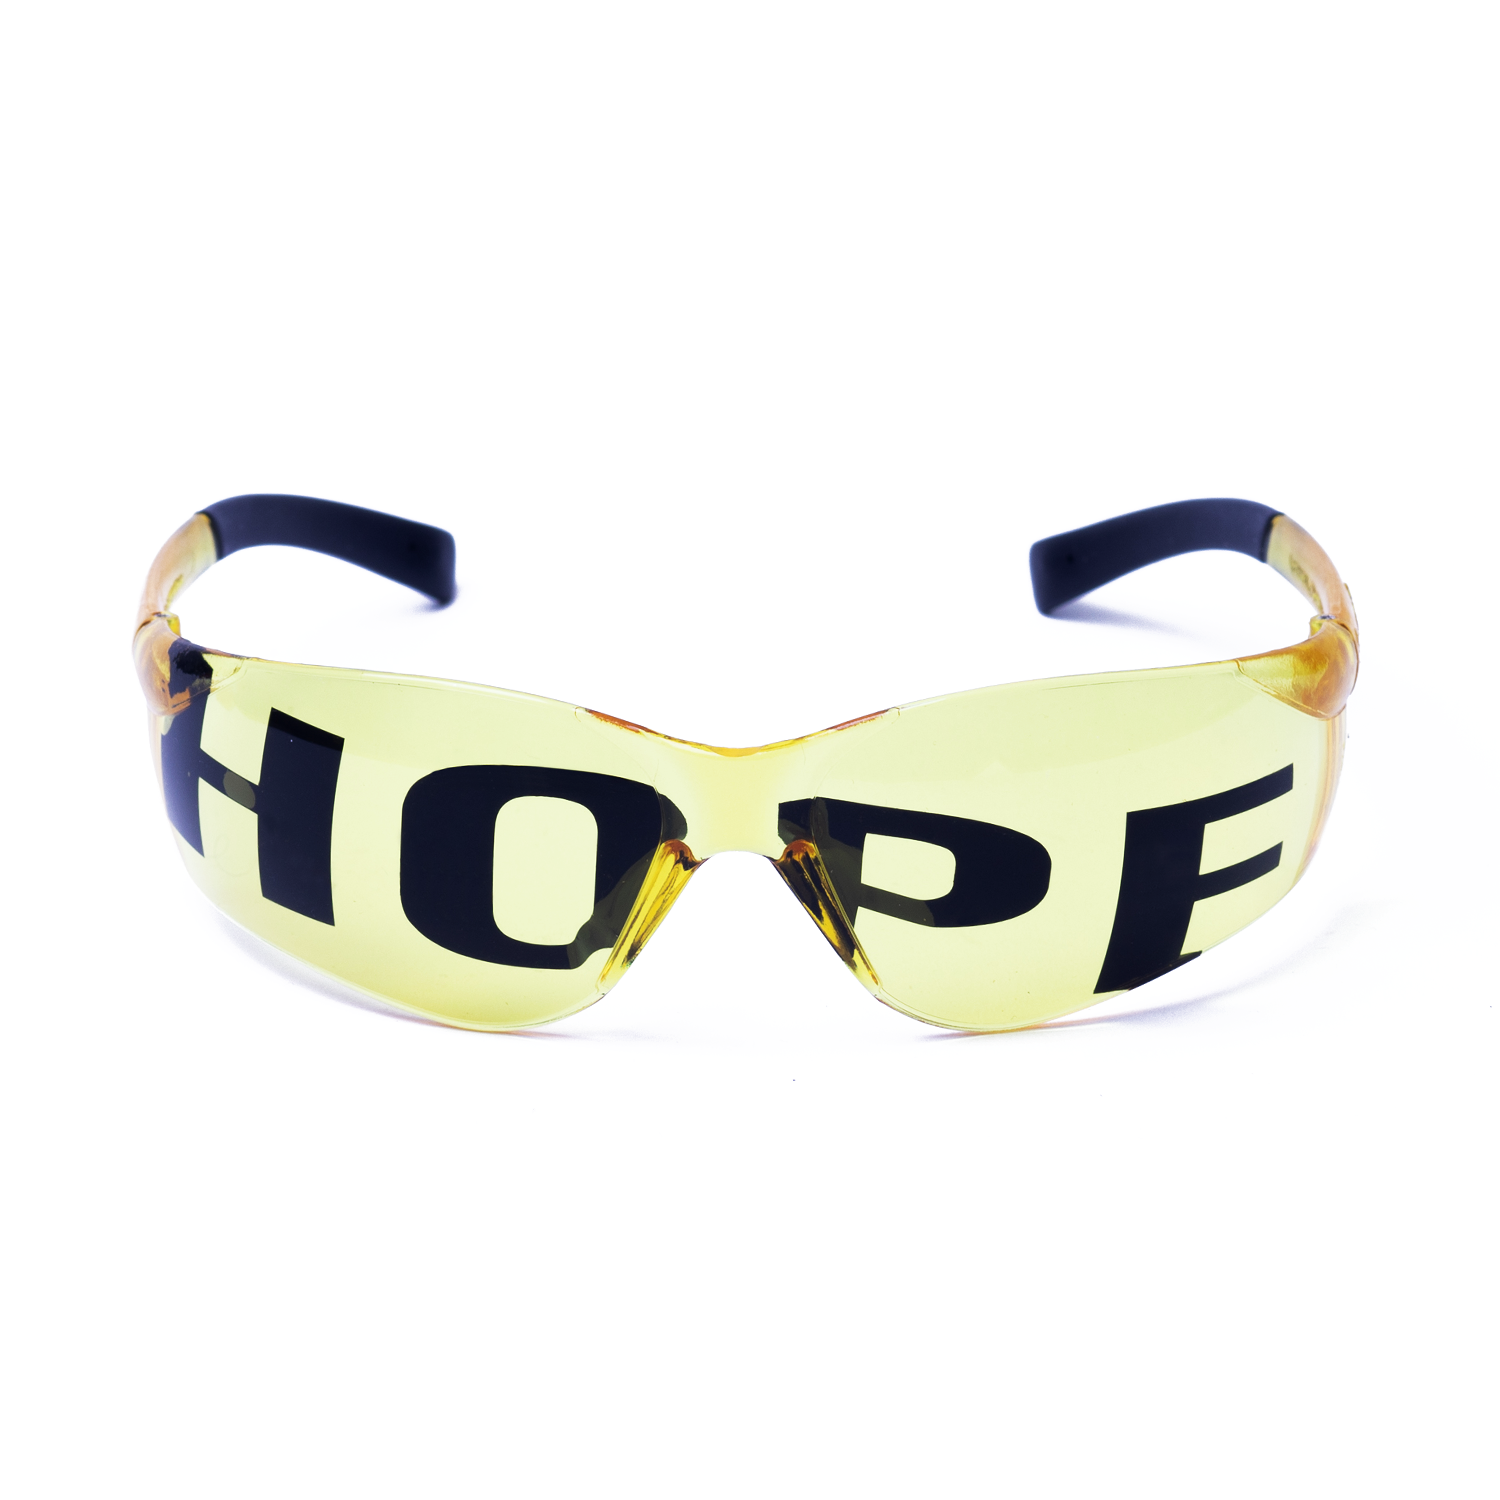 “HOPE”  SPEAK VOLUMES COLLECTION YELLOW SUNNIES + OPTICS Sunglasses Collection- NRODA